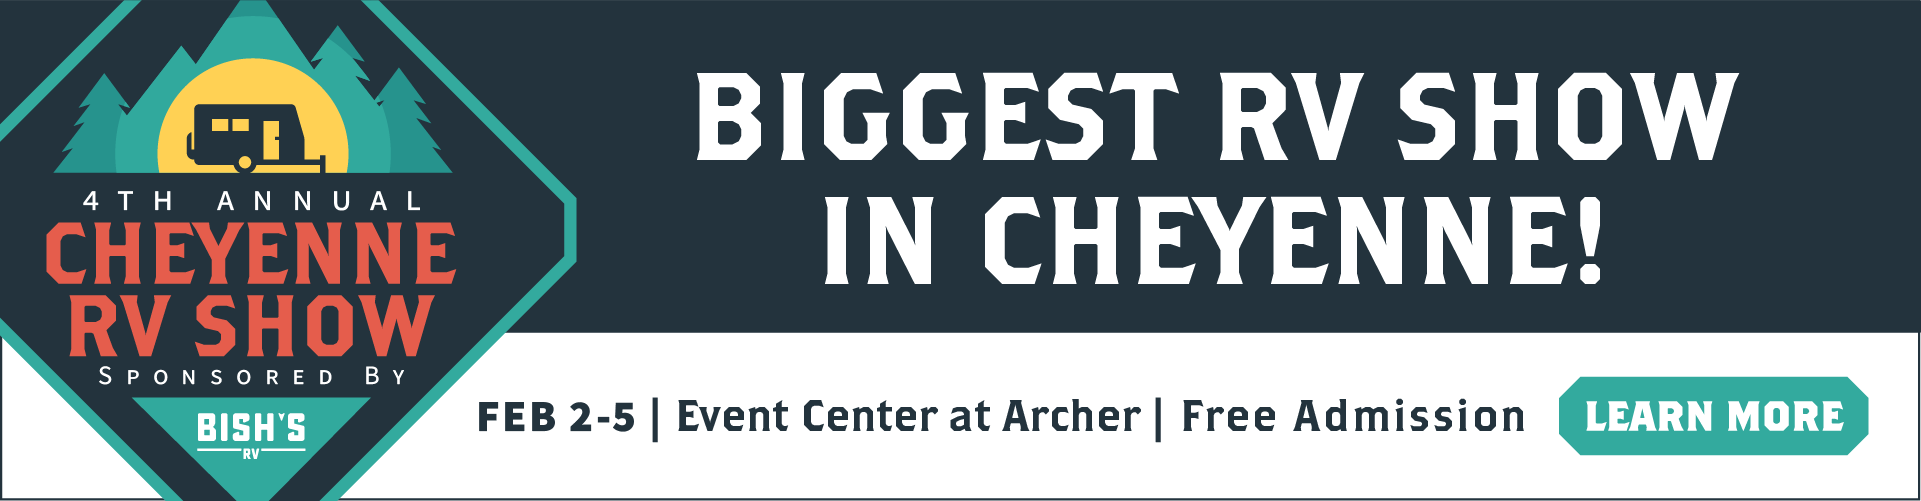 4th Annual Cheyenne RV Show - Feb. 2-5 - Event Center at Archer